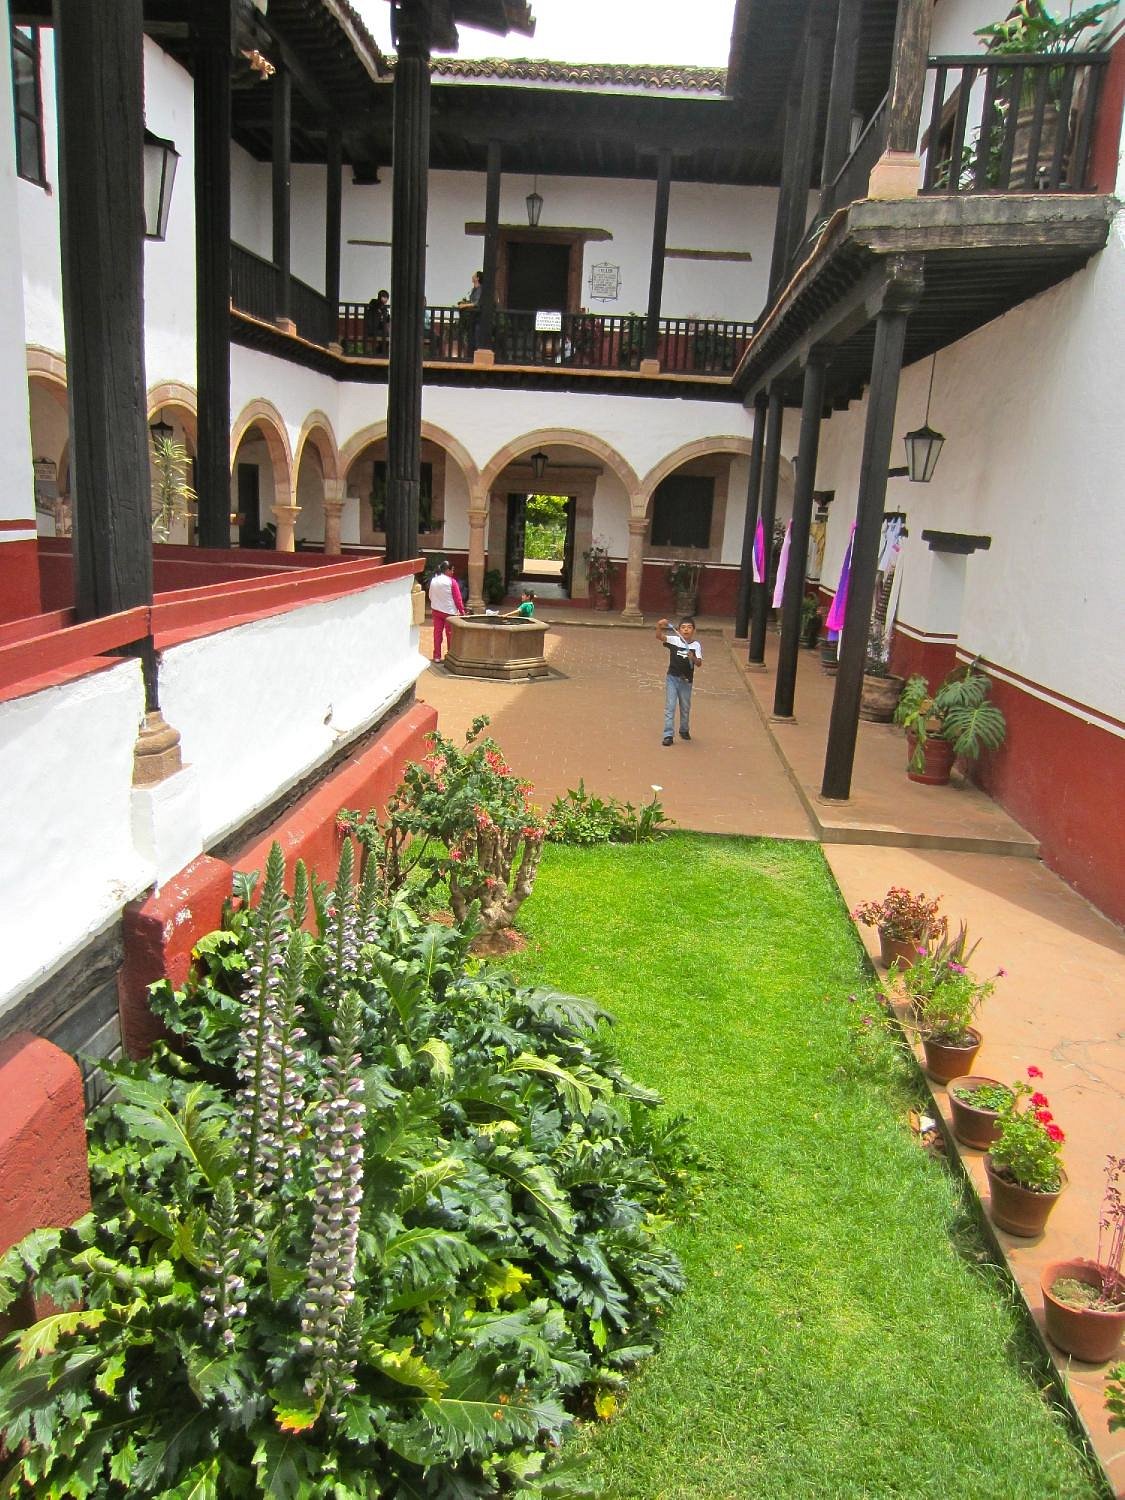 Gallery of Pátio House / PROMONTORIO - 11